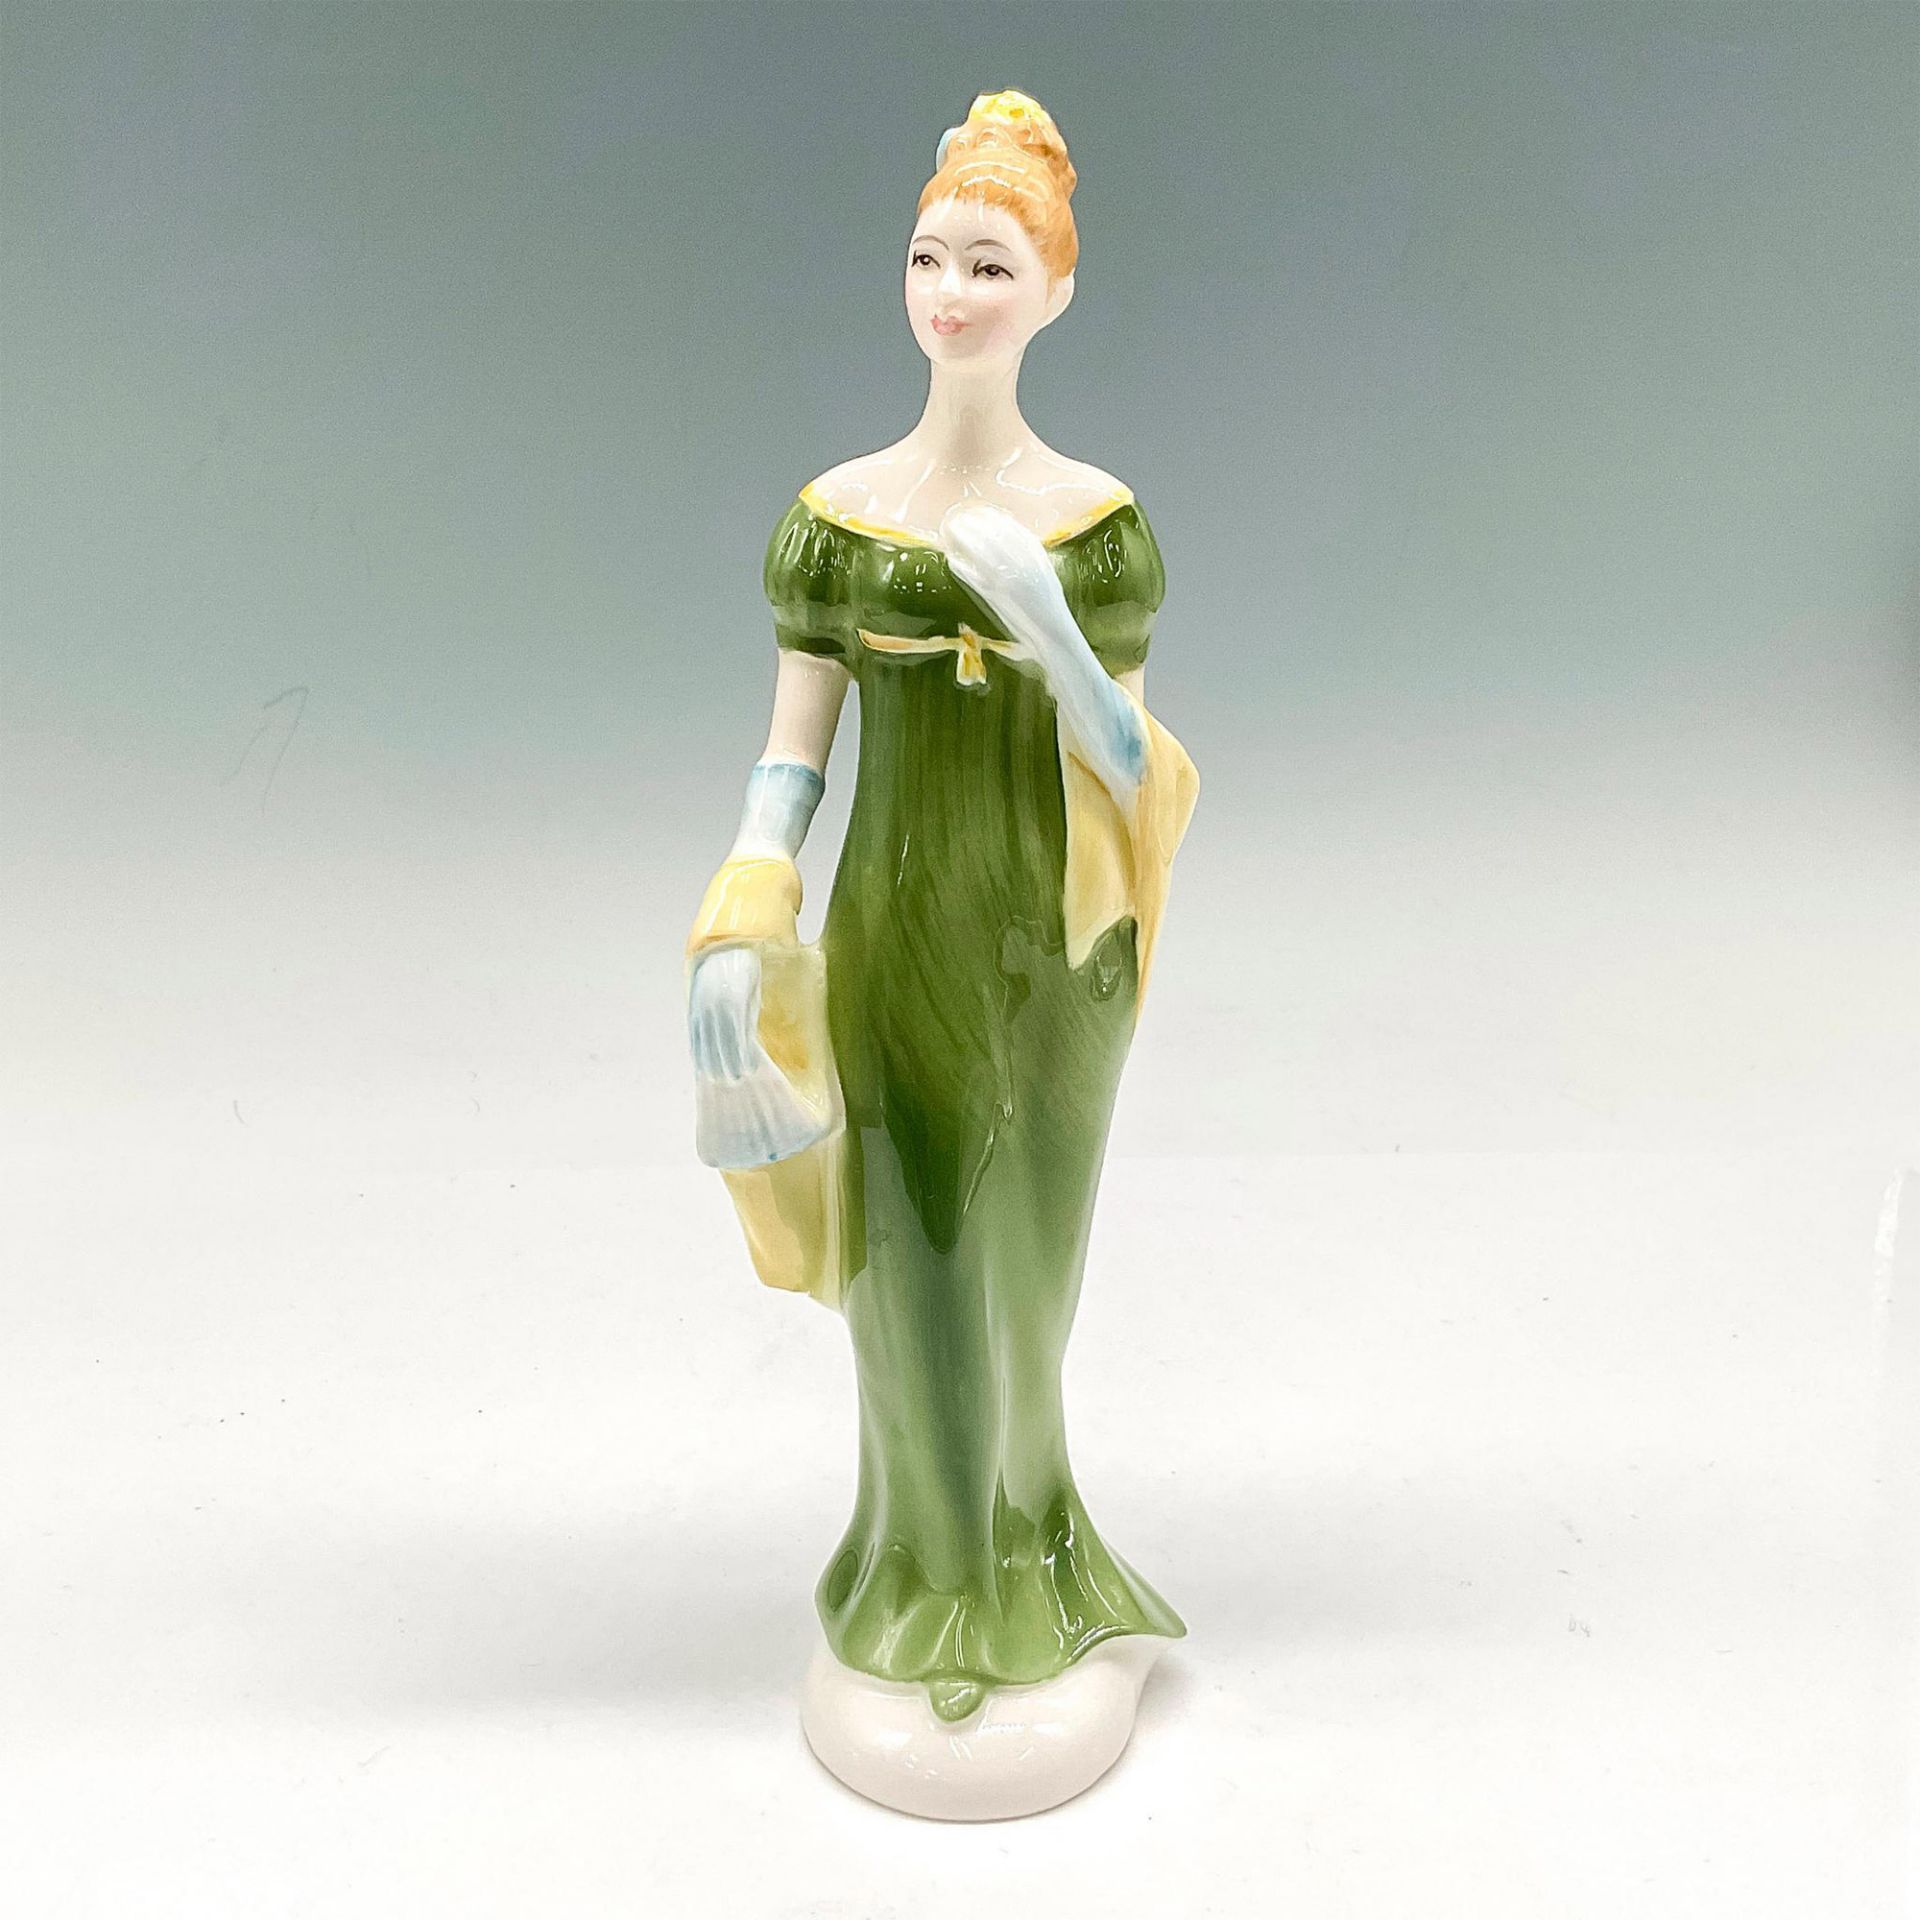 Lorna - HN2311 - Royal Doulton Figurine